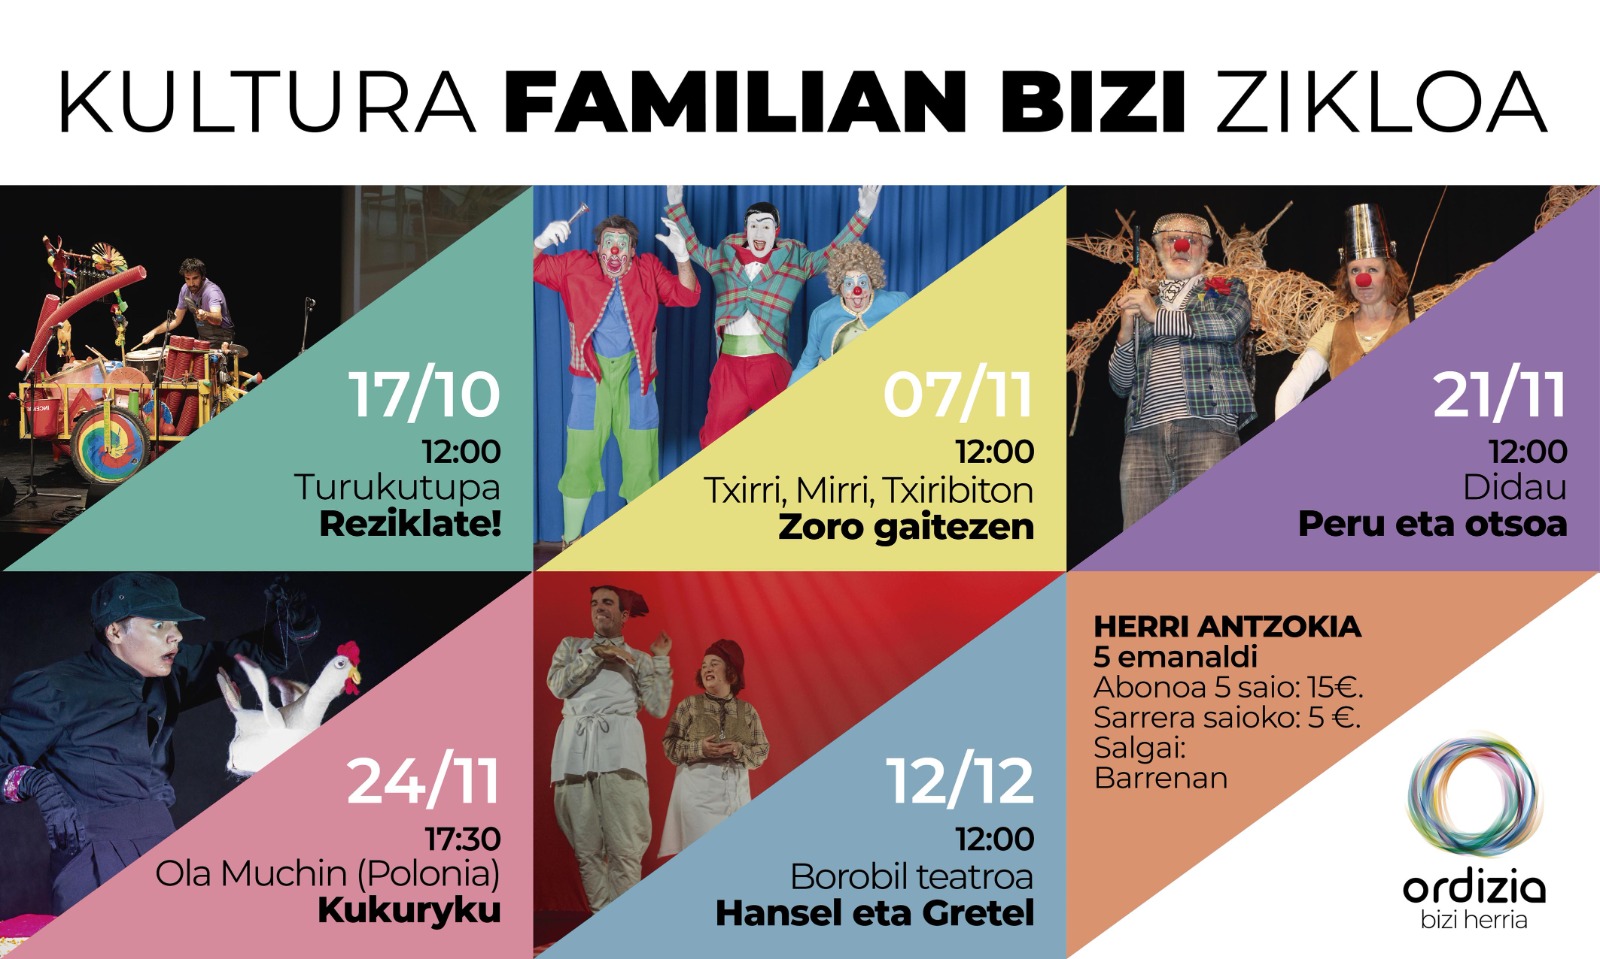 Kultura familian bizi, para el disfrute de las familias